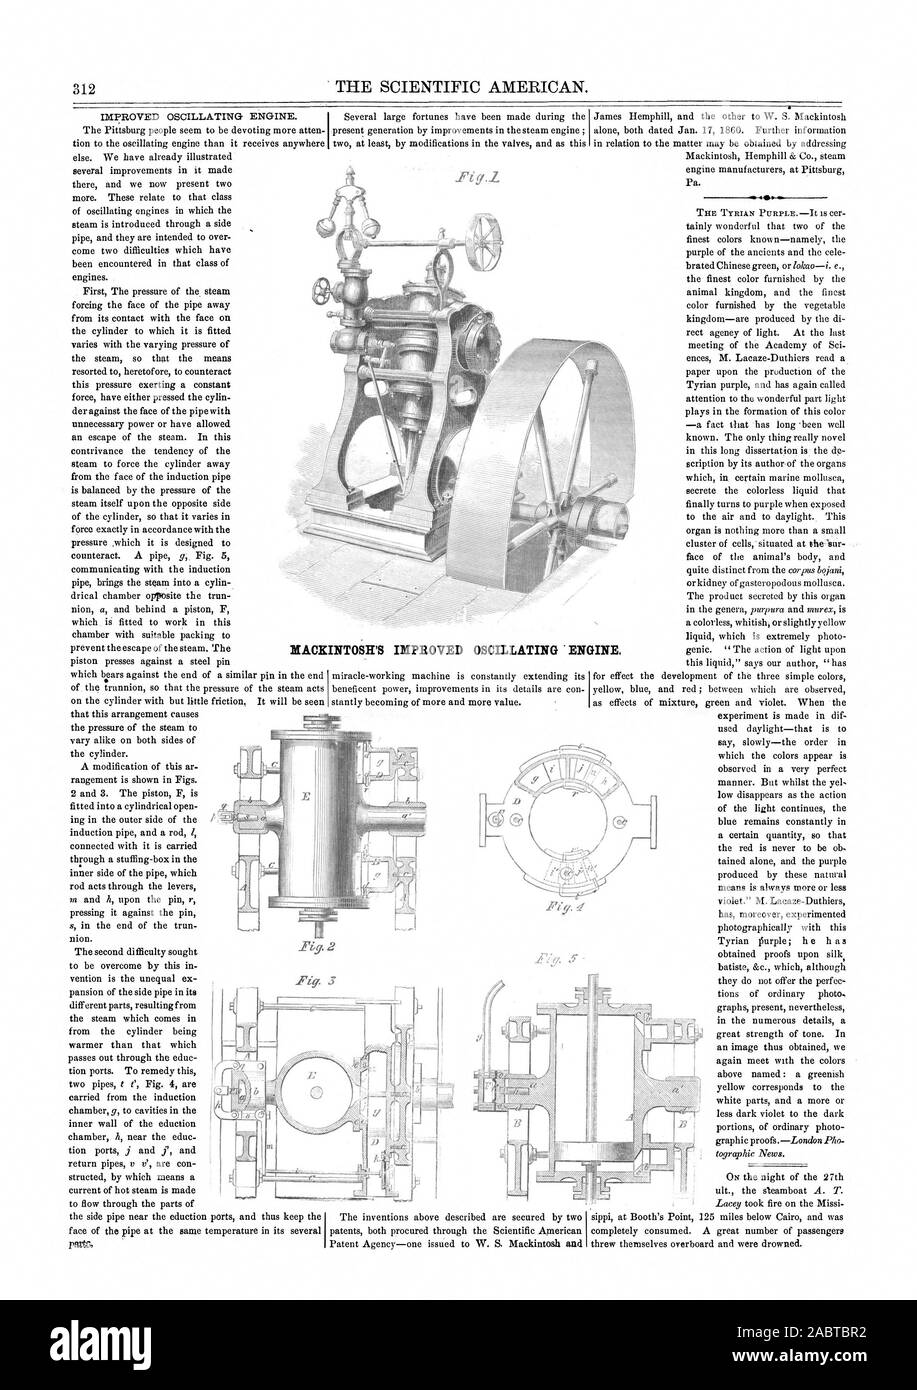 MACKINTOSH'S IMPROVED OSCILLATING ENGINE., scientific american, 1860-05-12 Stock Photo